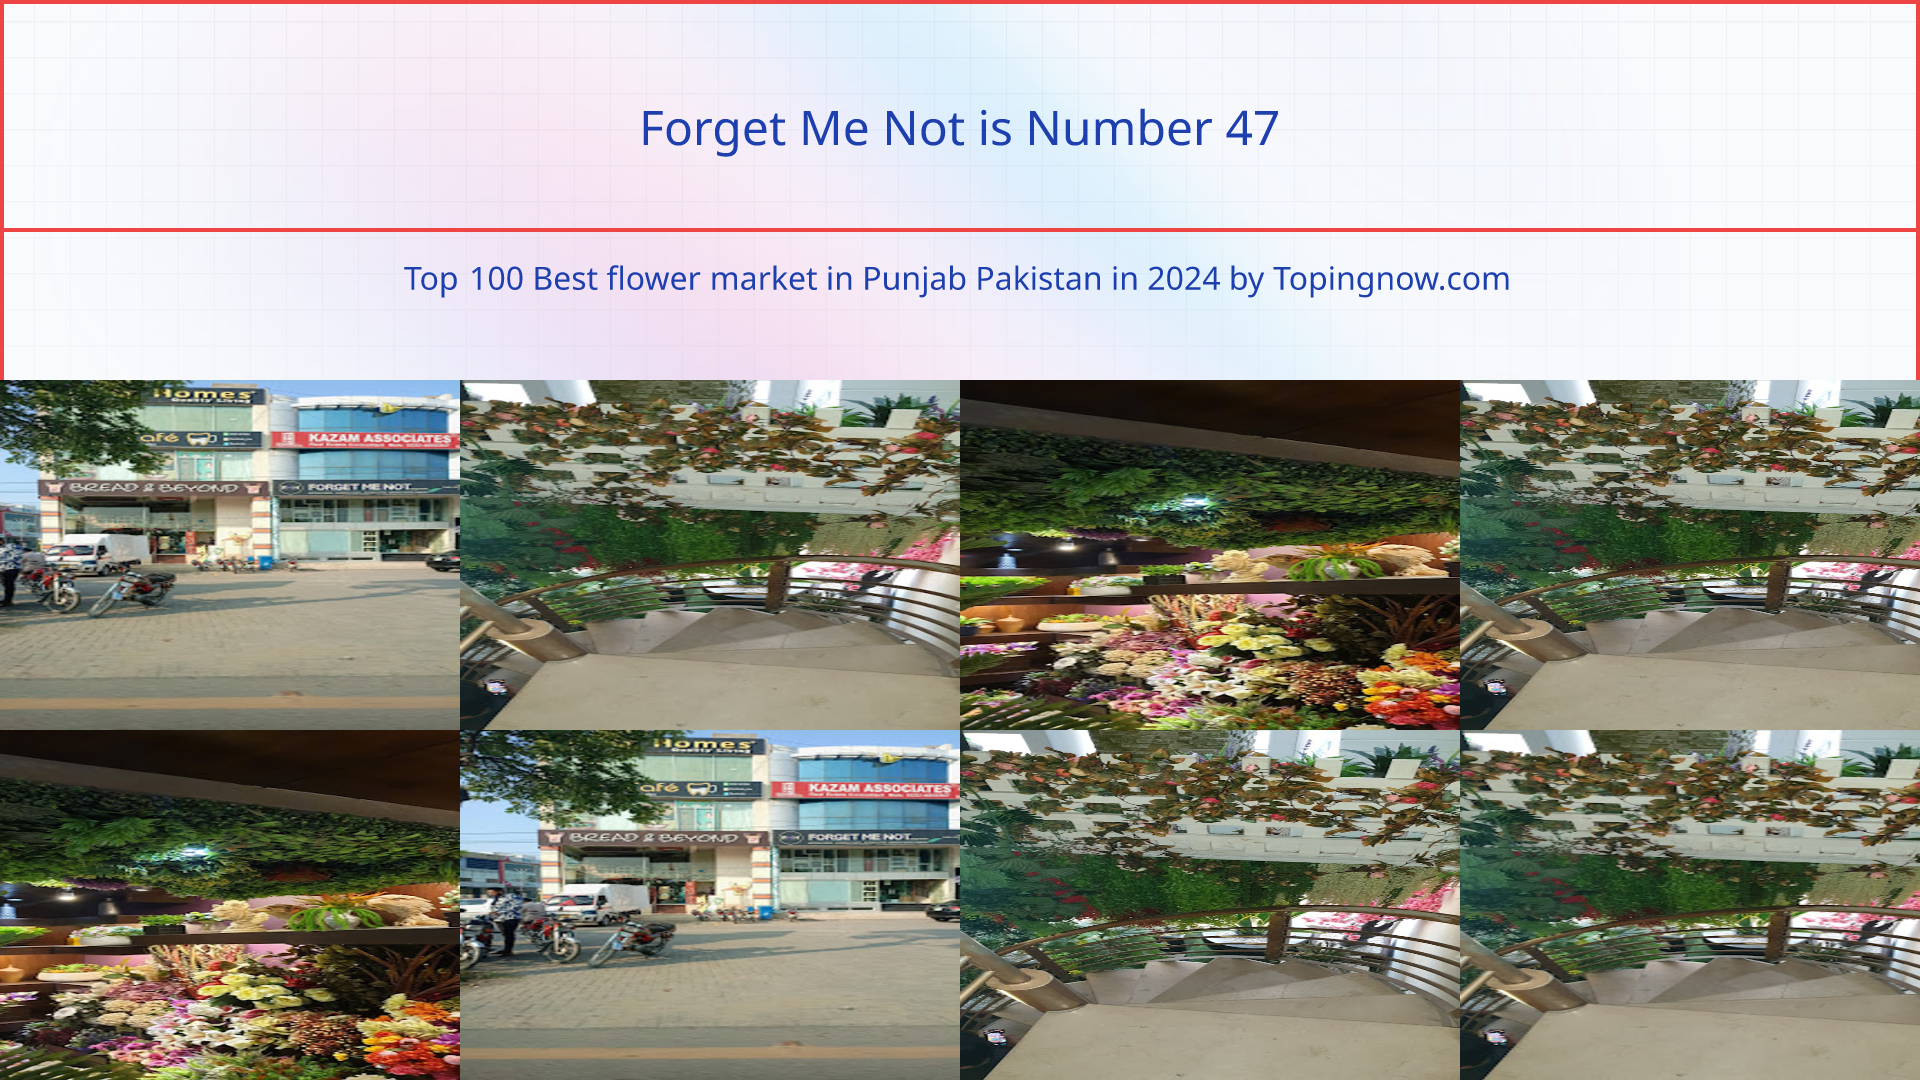 Forget Me Not: Top 100 Best flower market in Punjab Pakistan in 2024